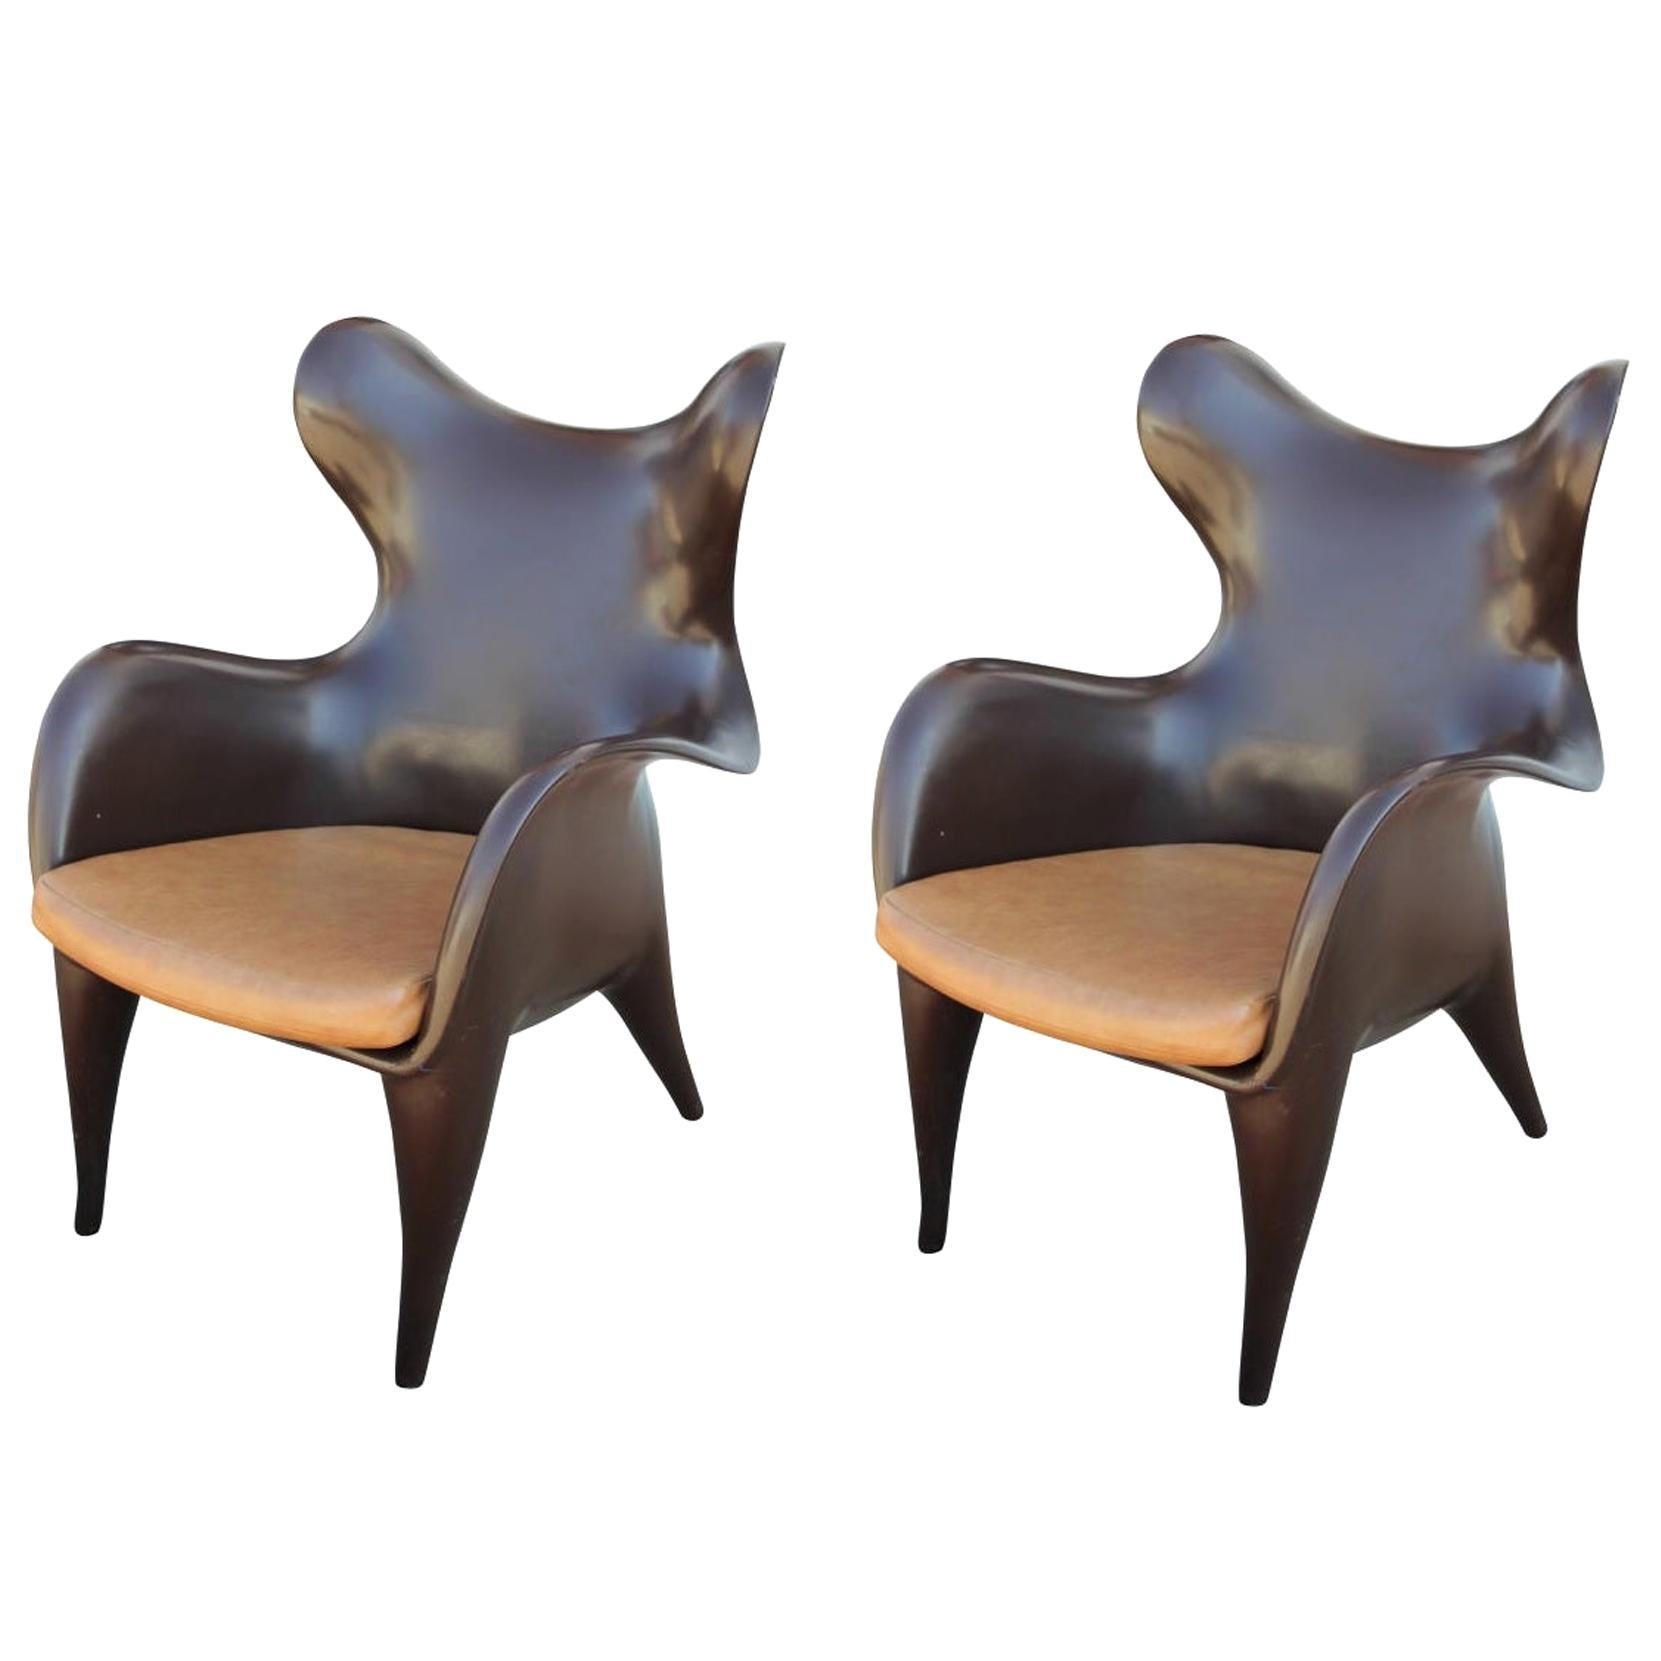 Pair of Modern Sculptural Johnnie Chairs by Jordan Mozer